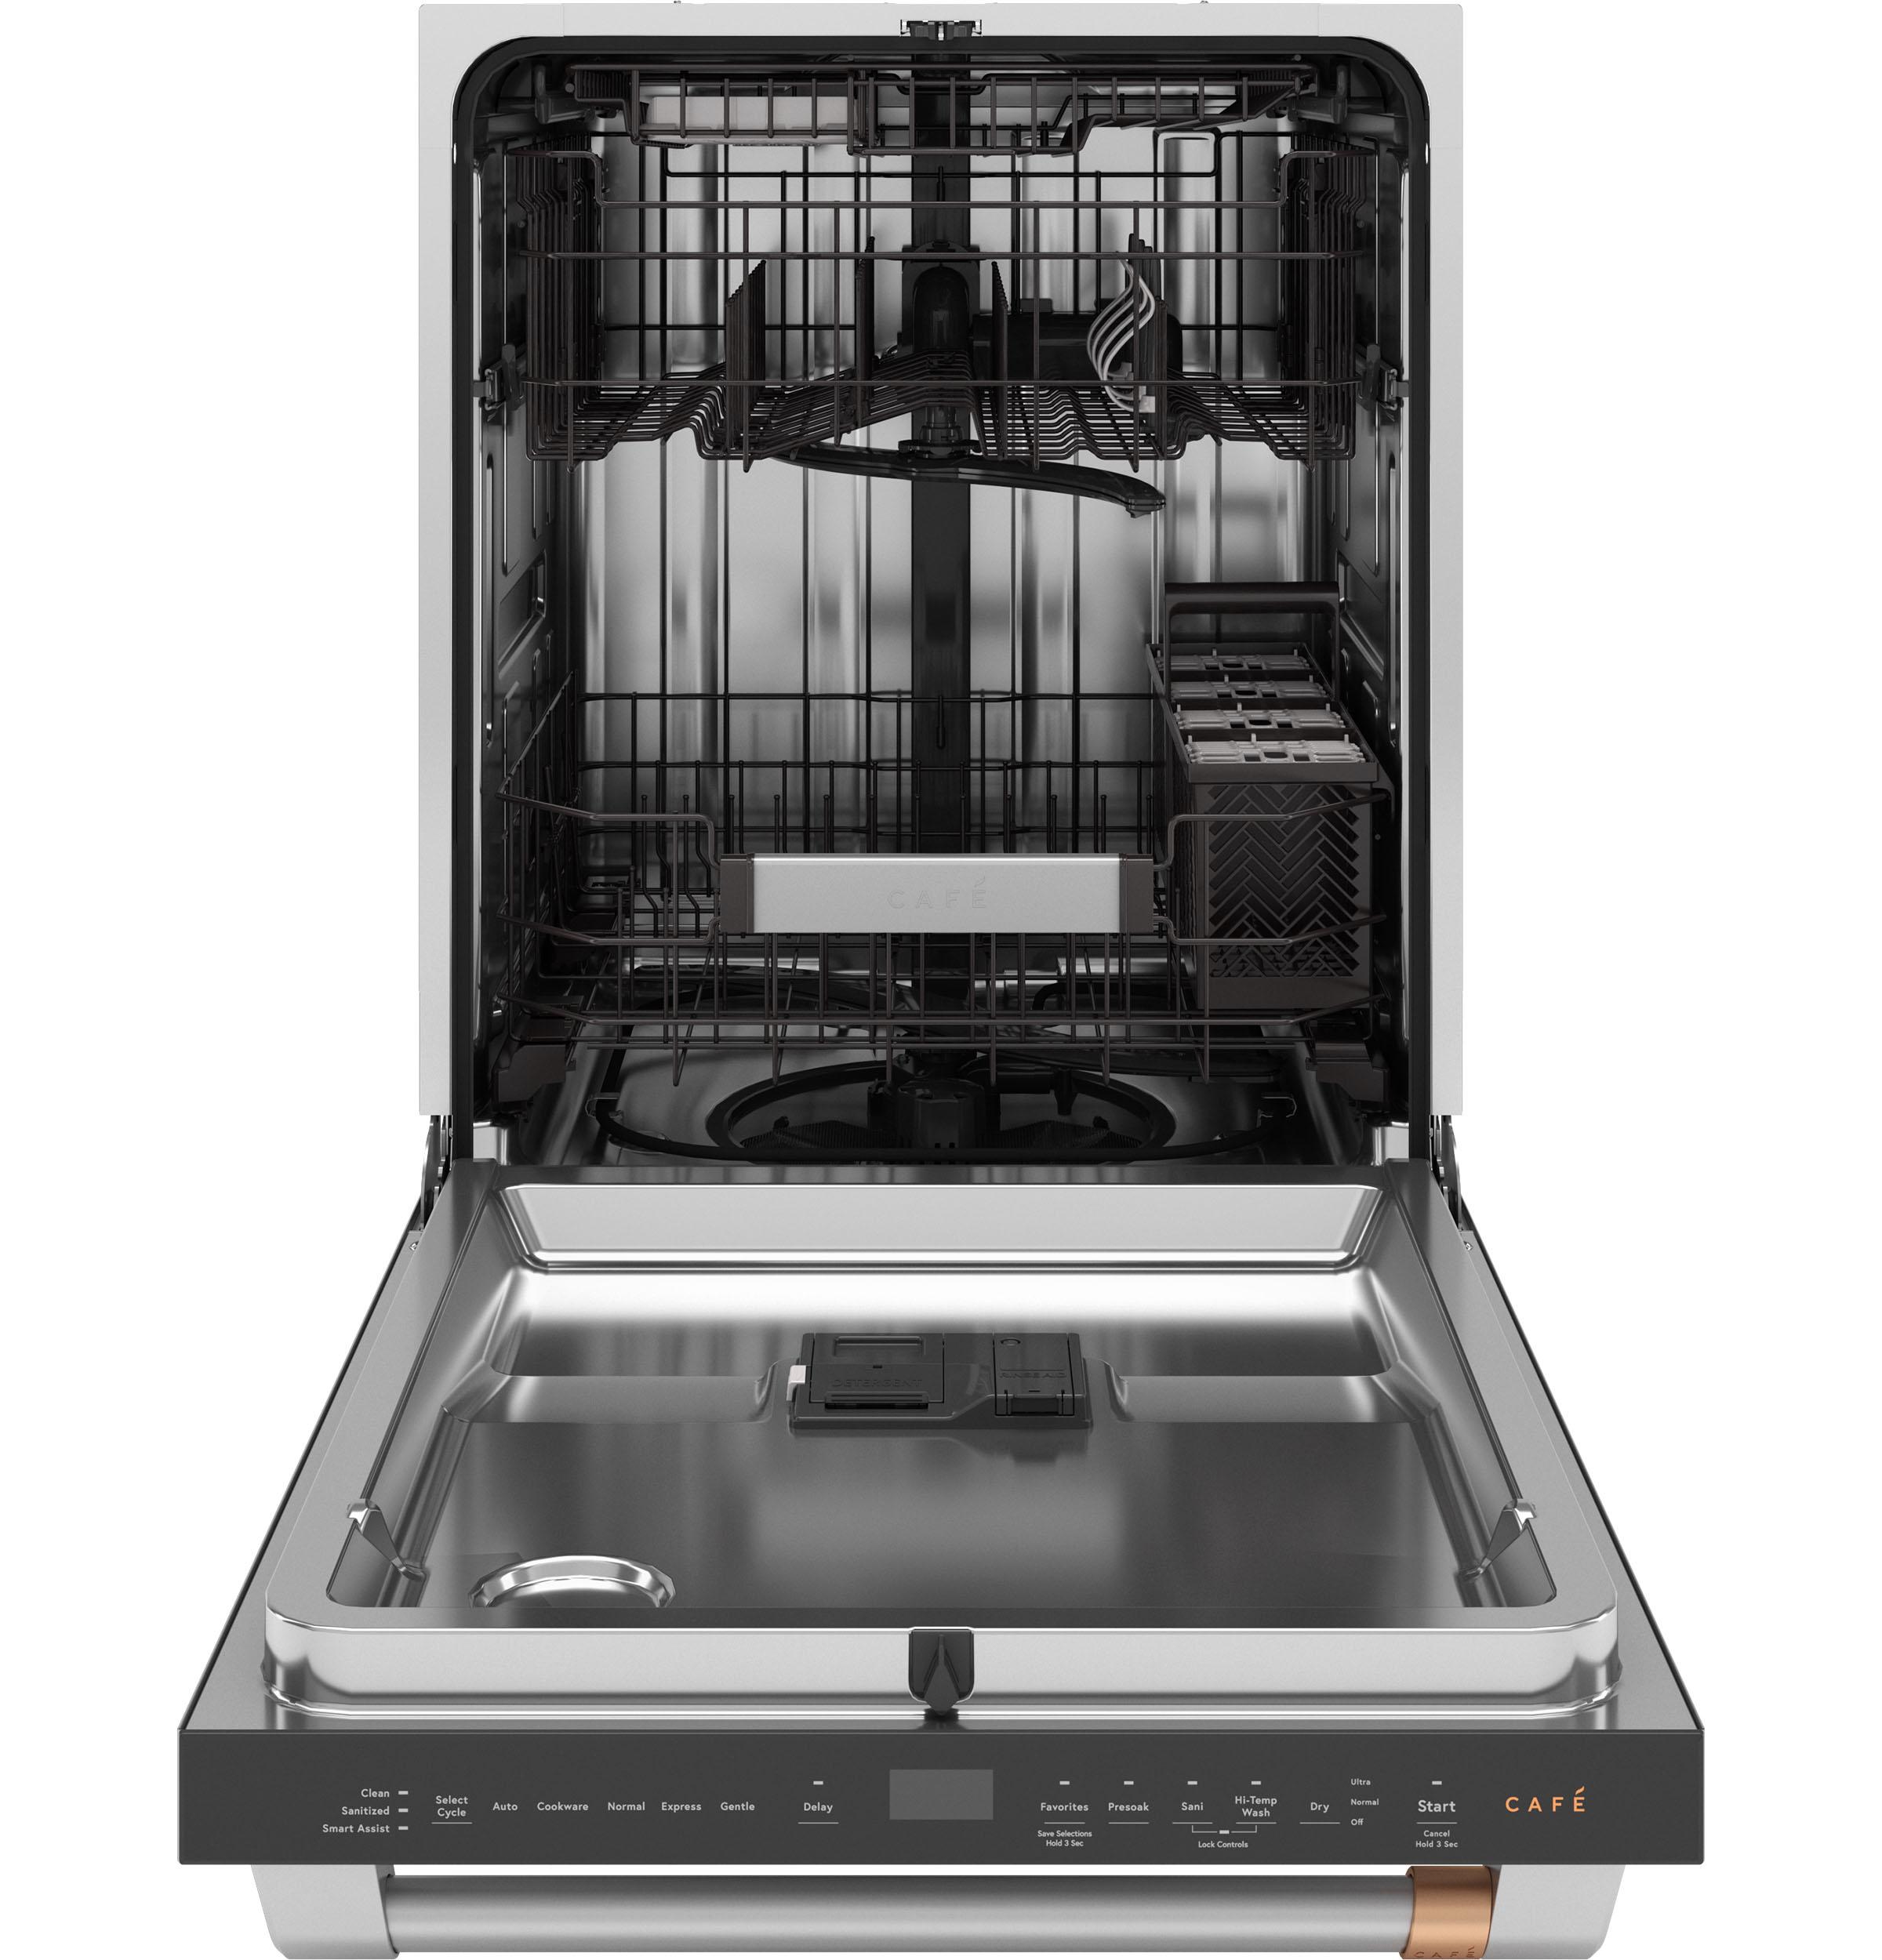 Cafe Caf(eback)™ CustomFit ENERGY STAR Stainless Interior Smart Dishwasher with Ultra Wash